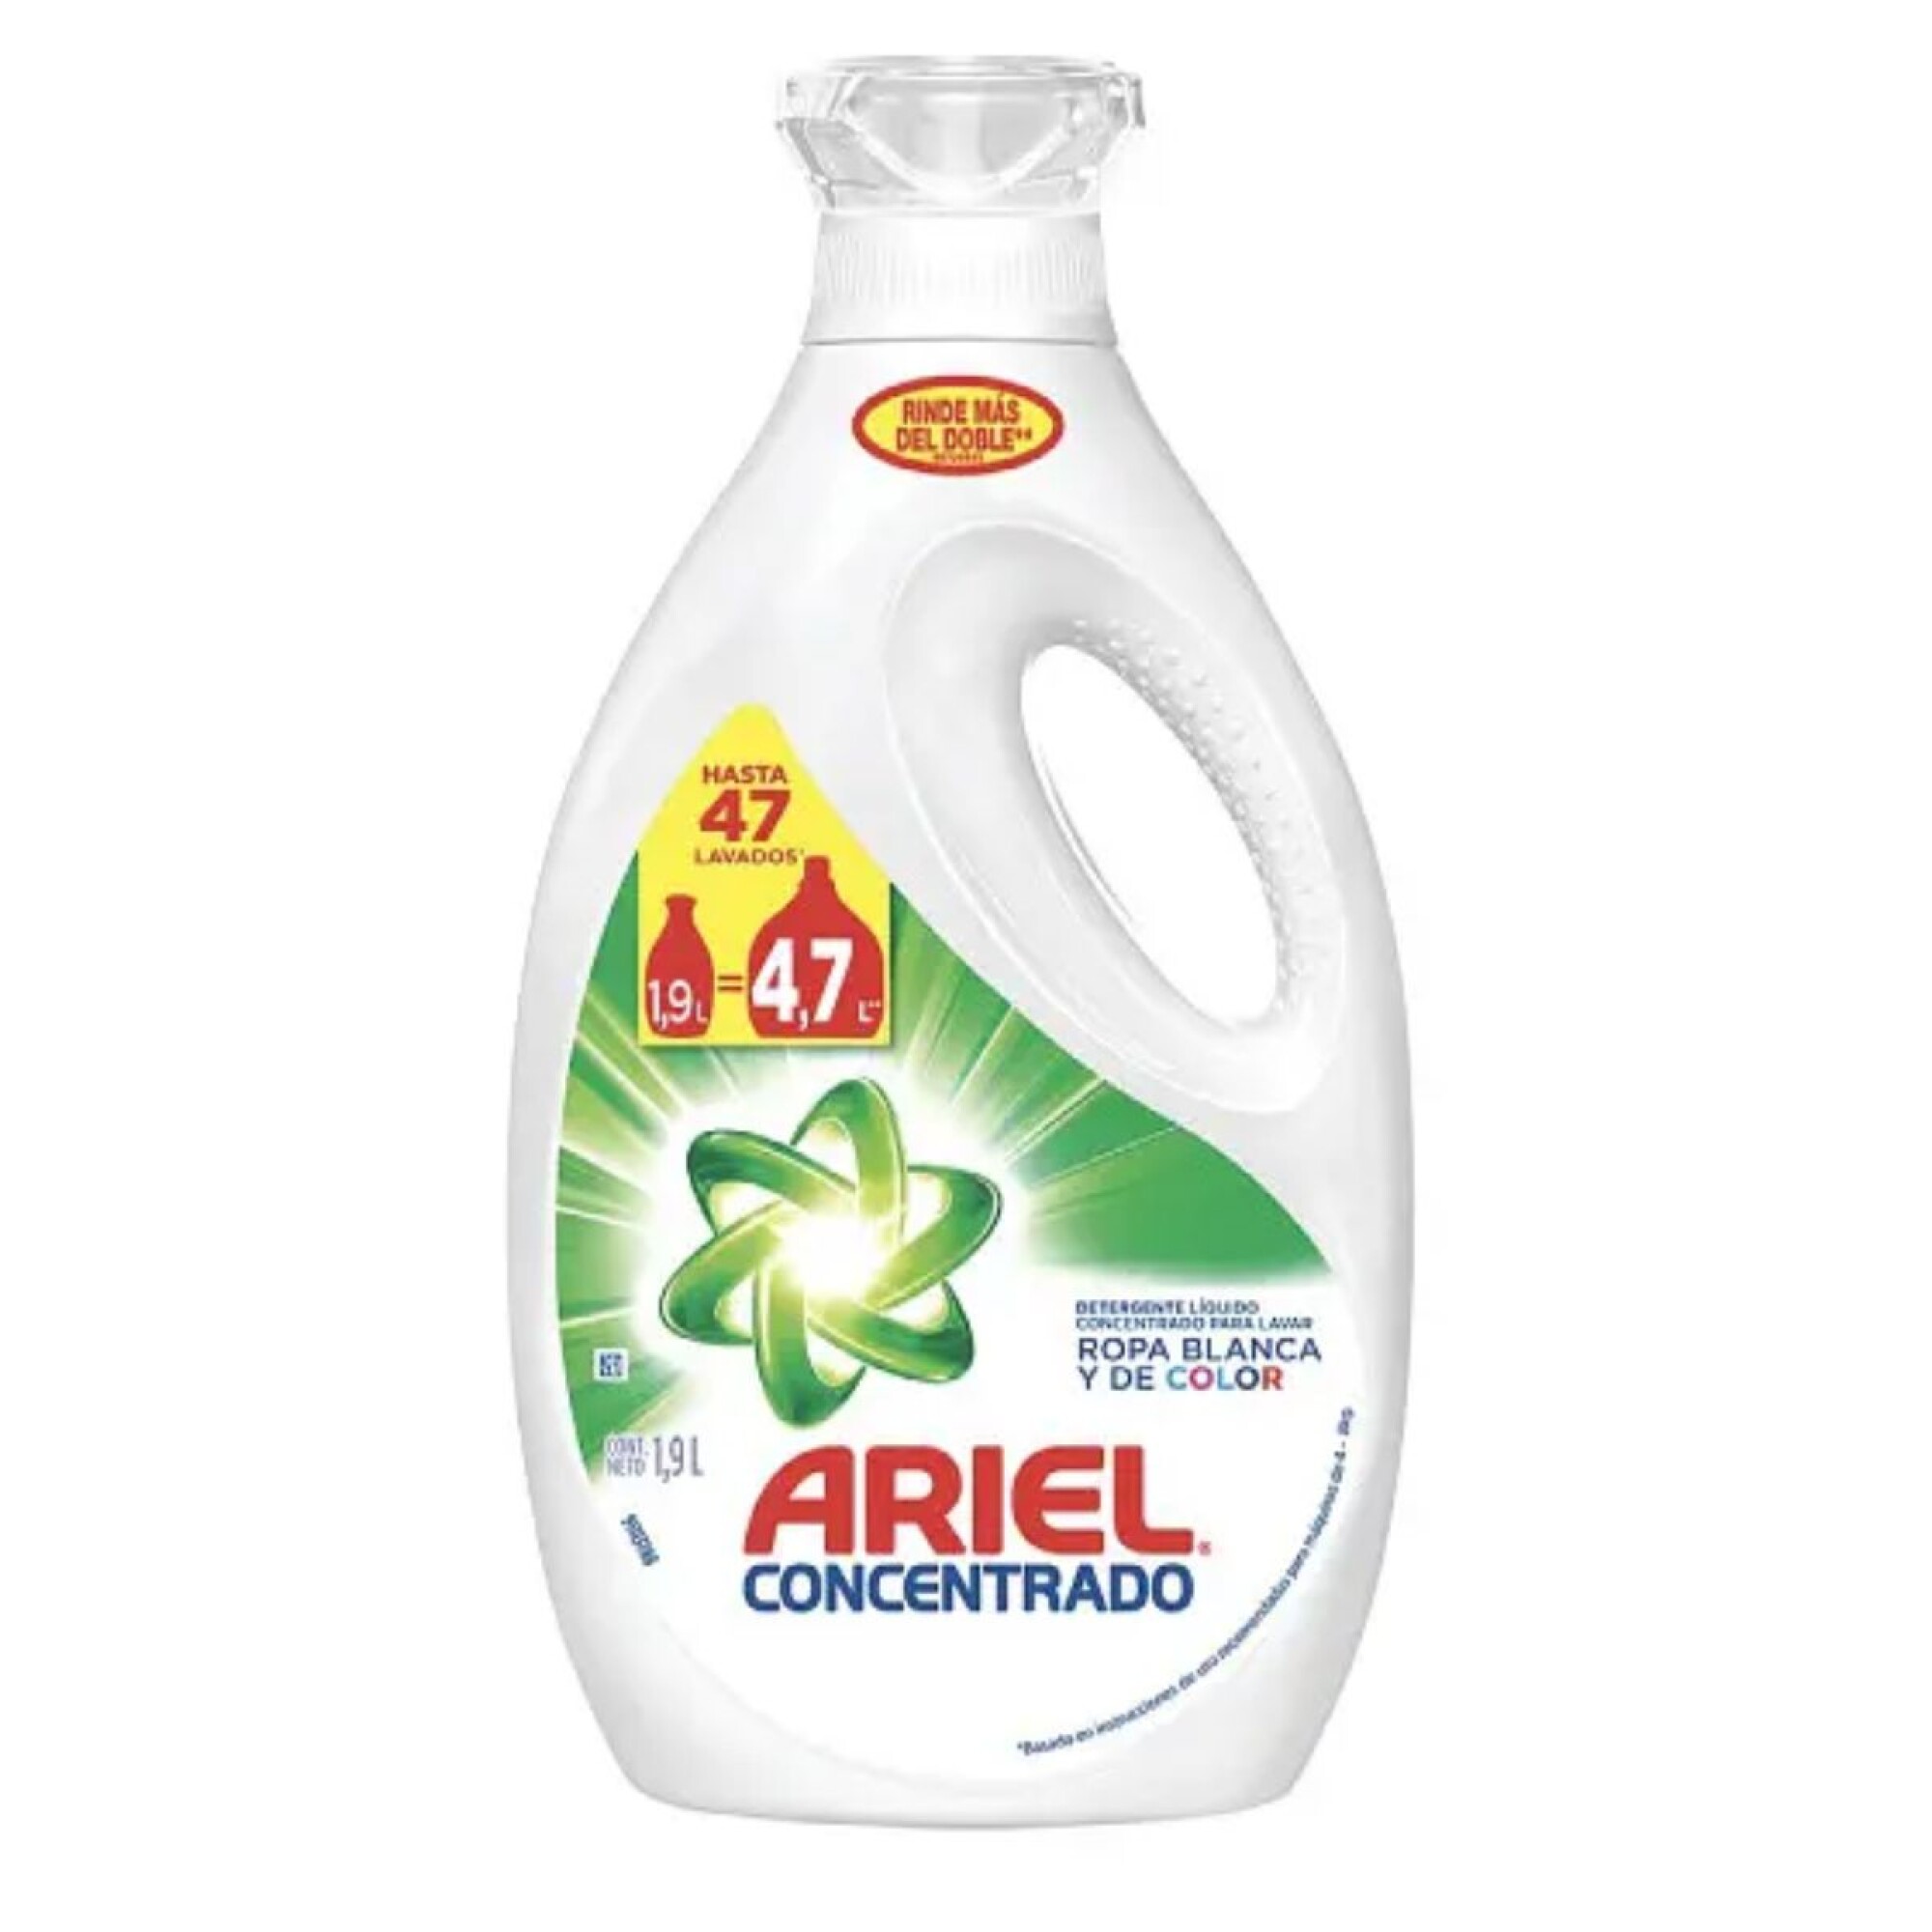 Detergente Ariel Líquido Doble Poder 3 lt.